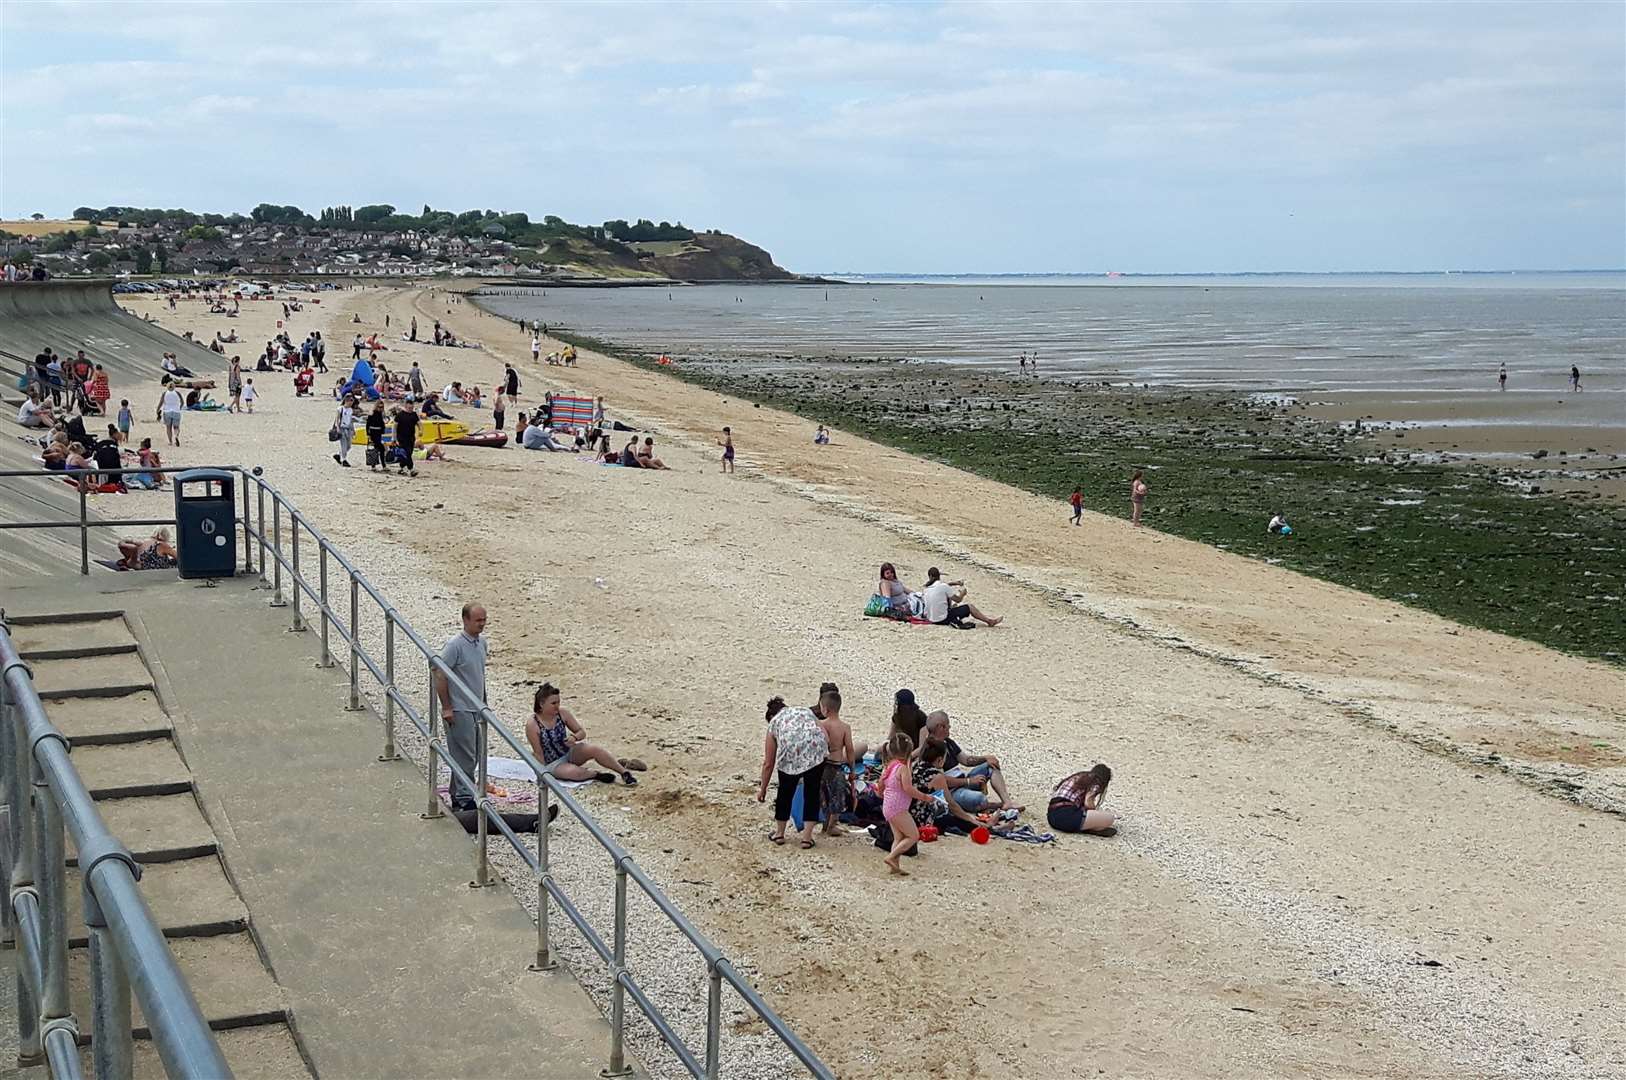 Leysdown beach will have a full lifeguard service this summer